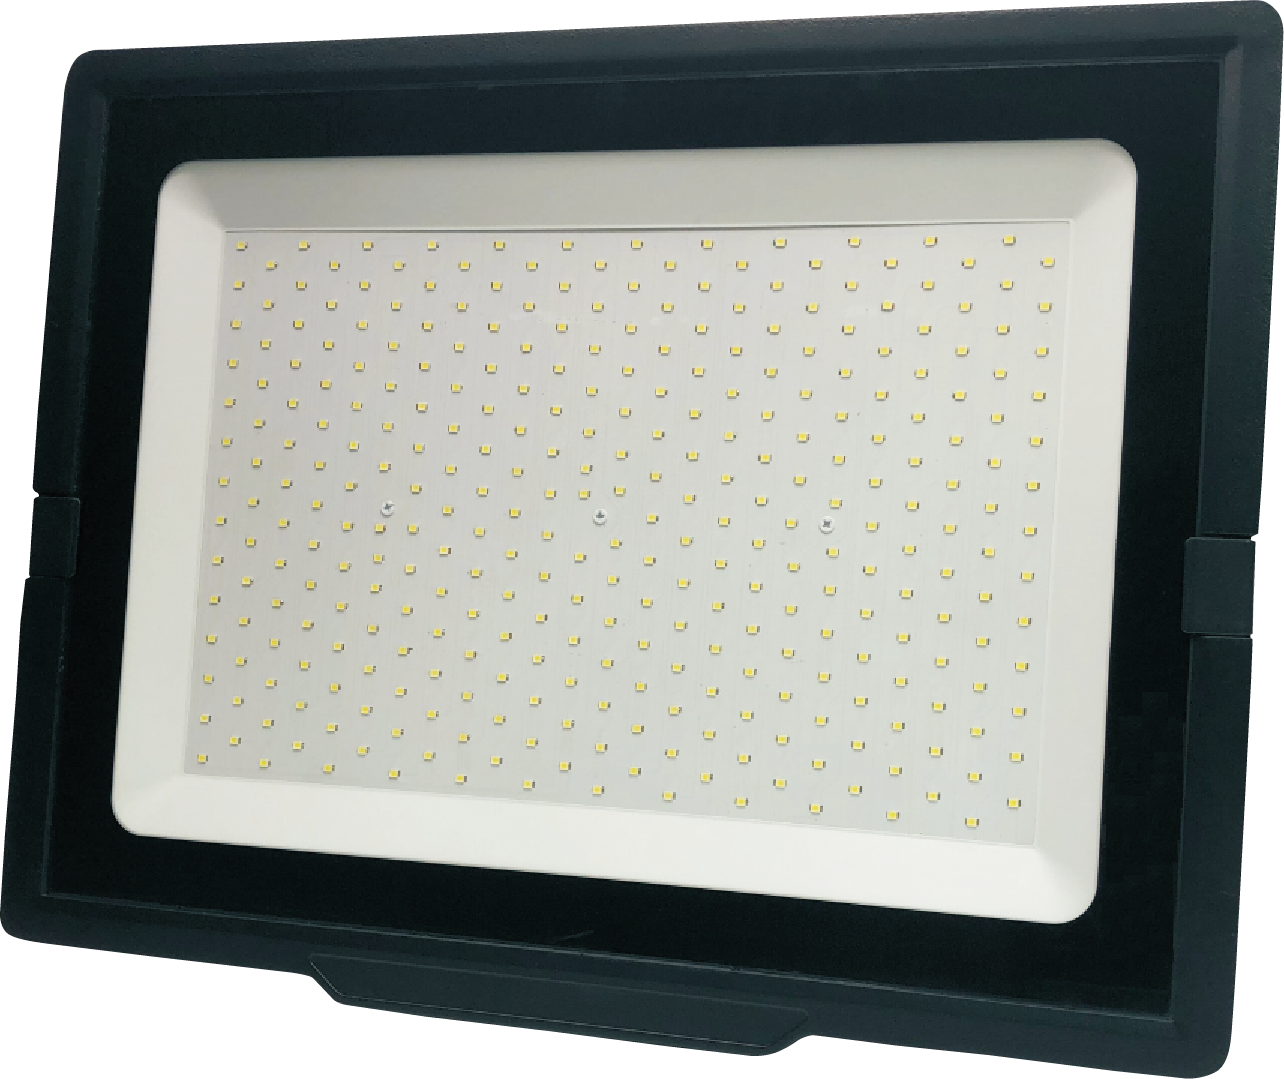 Proiector SMD slim LED 300W CW, negru, Novelite